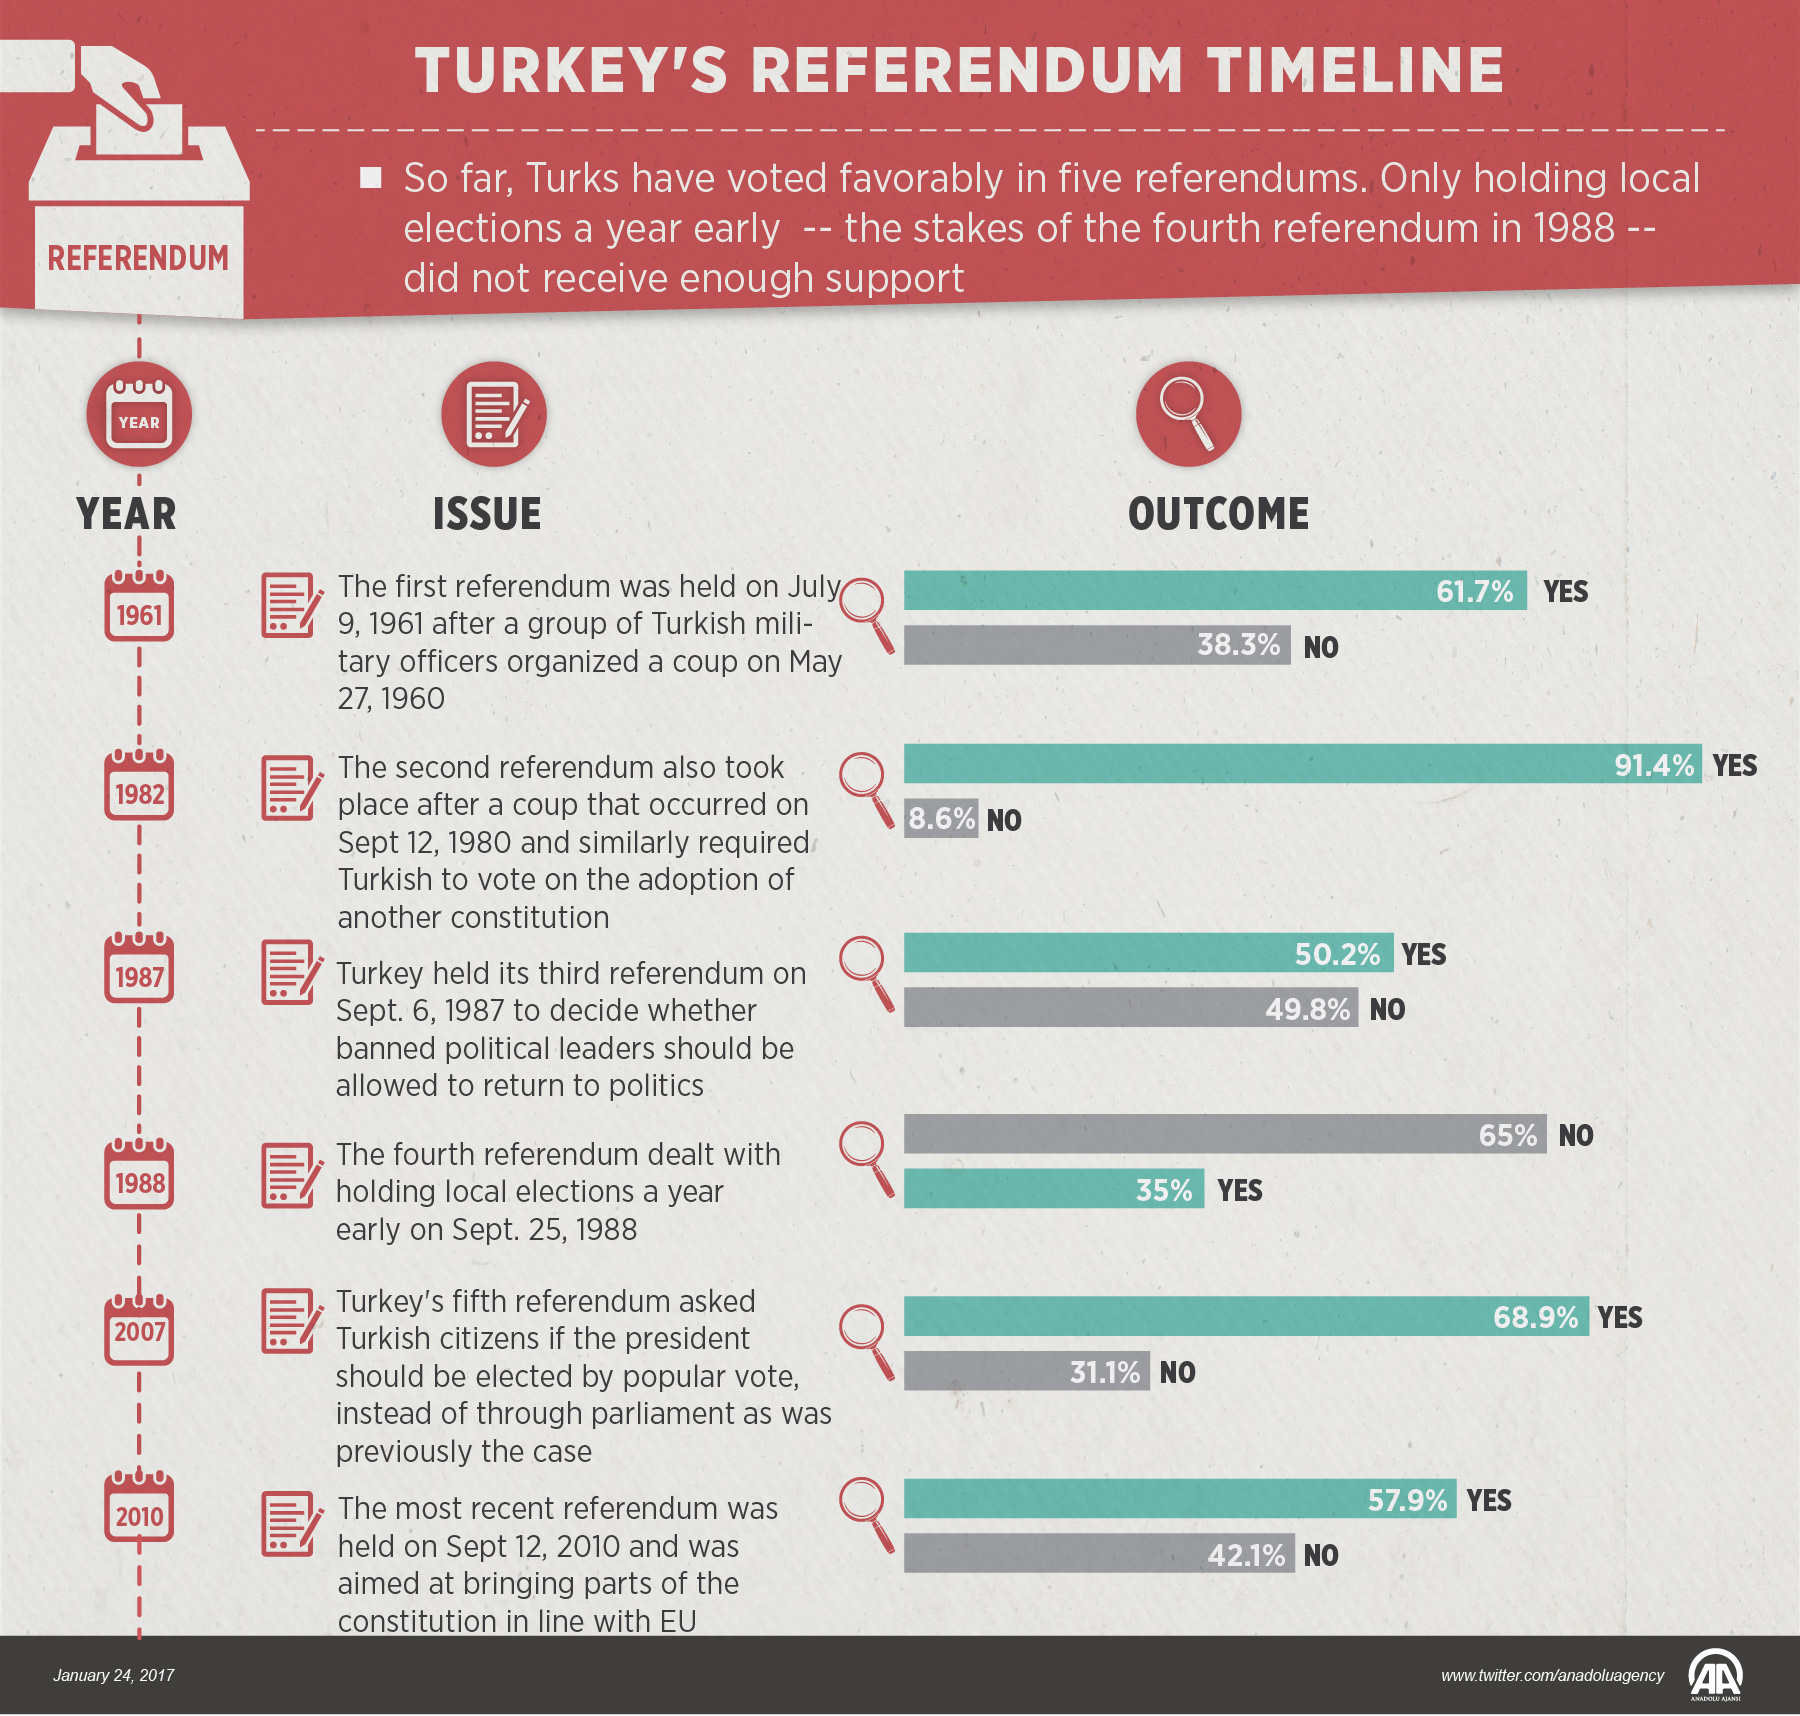 Turkey's referendum timeline